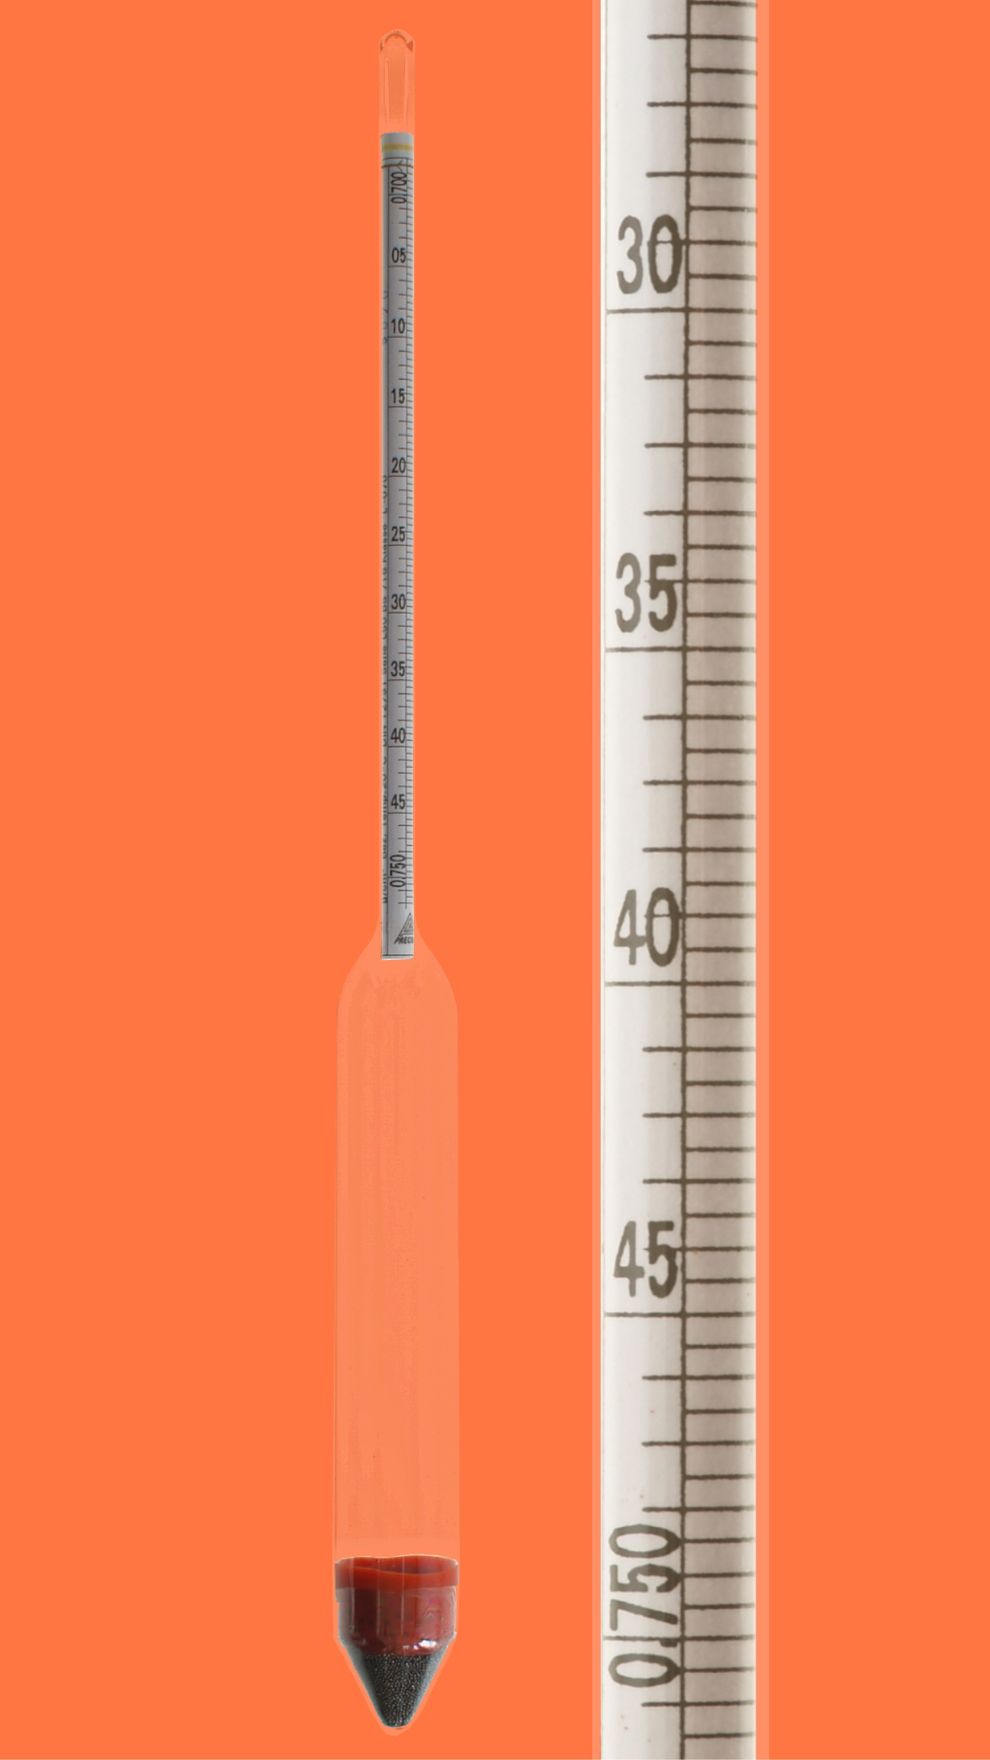 Aräometer, DIN 12791, L50, 1,15-1,20:0,0005g/cm³, Bezugstemp. 20°C, ohne Thermometer